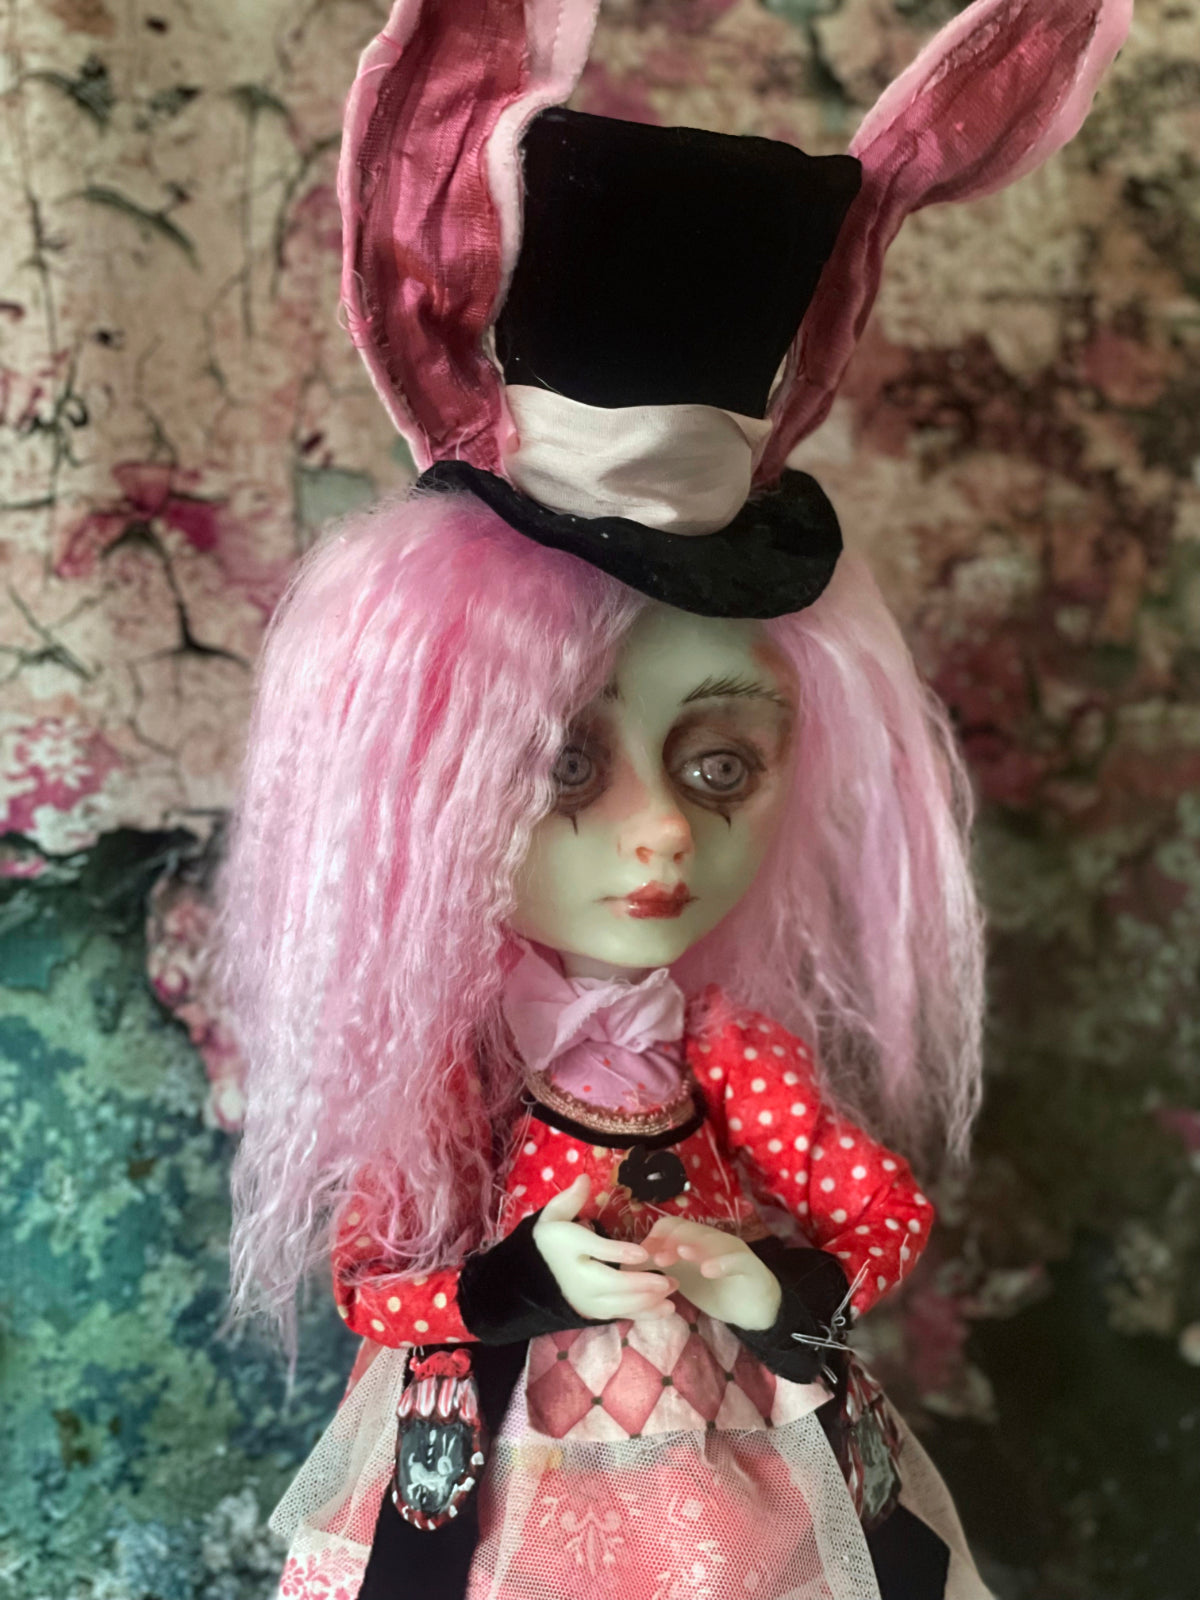 Breckyn Rabbit of the carousel Original LuLu Lancaster Art Doll